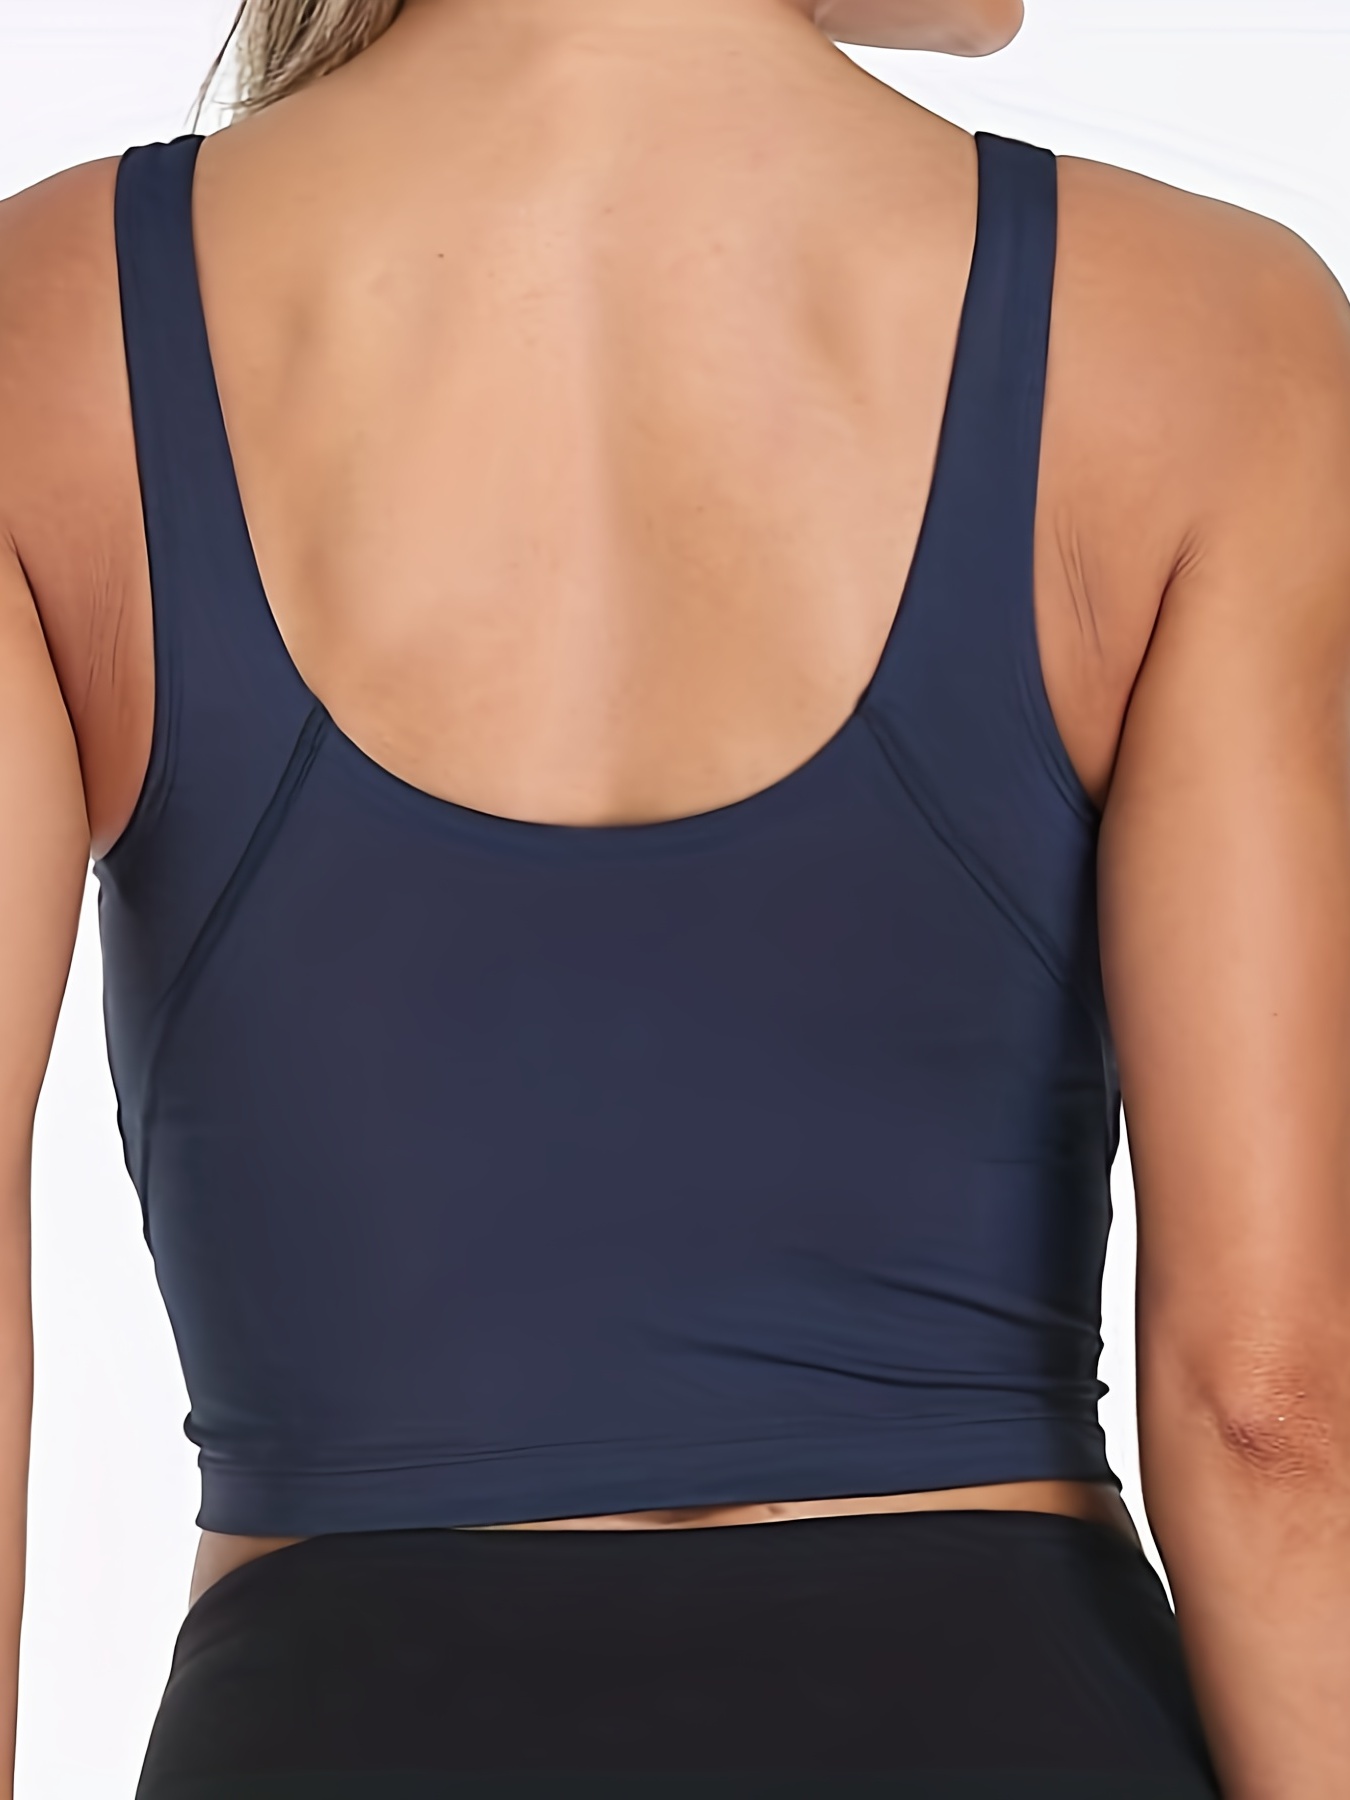 Lemedy Women Padded Sports Bra Fitness Workout Running Shirts Yoga Tank Top  (L, Navy Blue) 